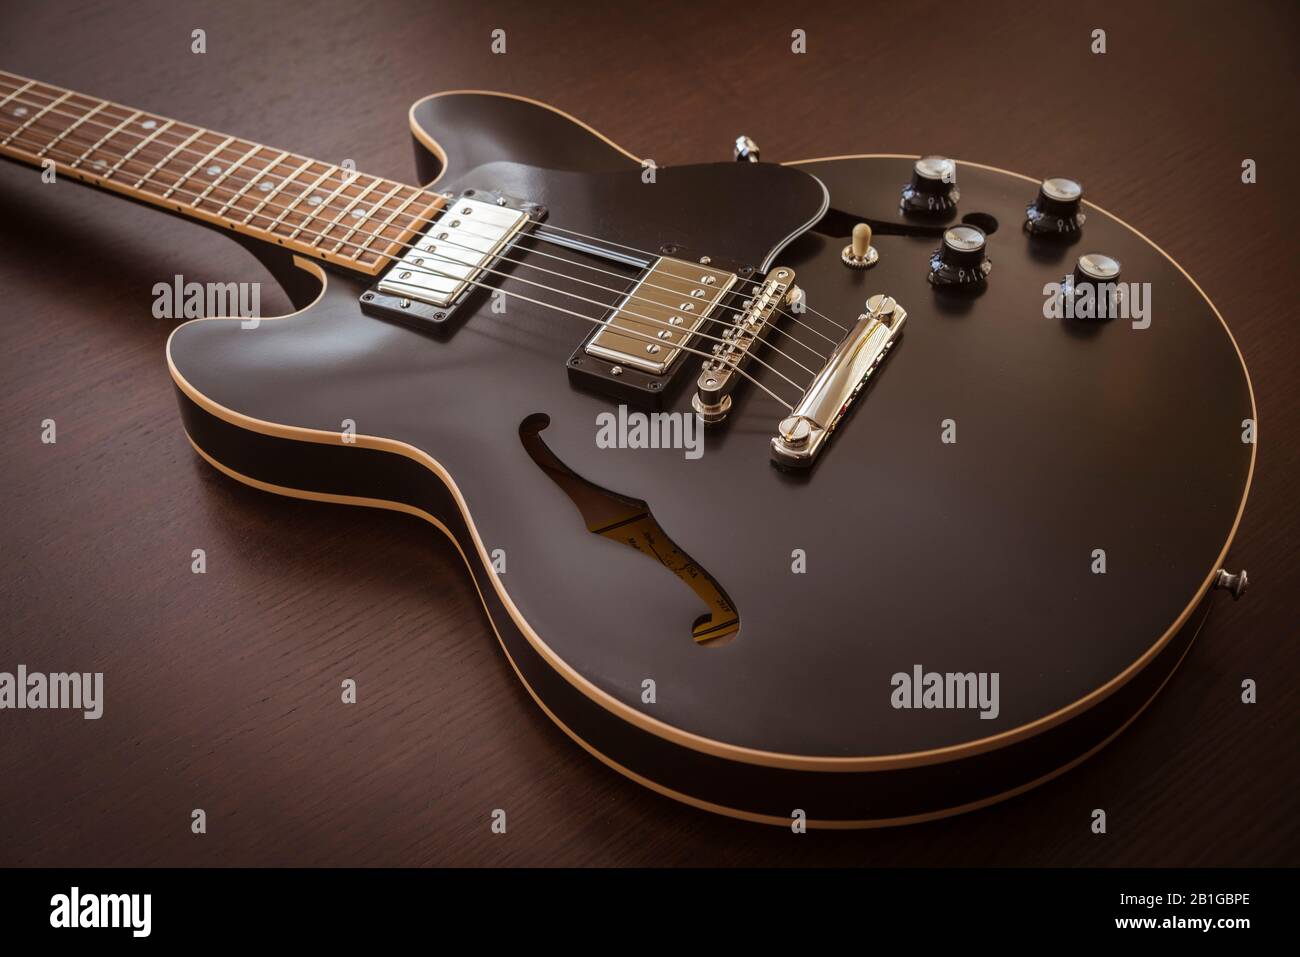 Semi hollow guitar hi-res stock photography and images - Alamy